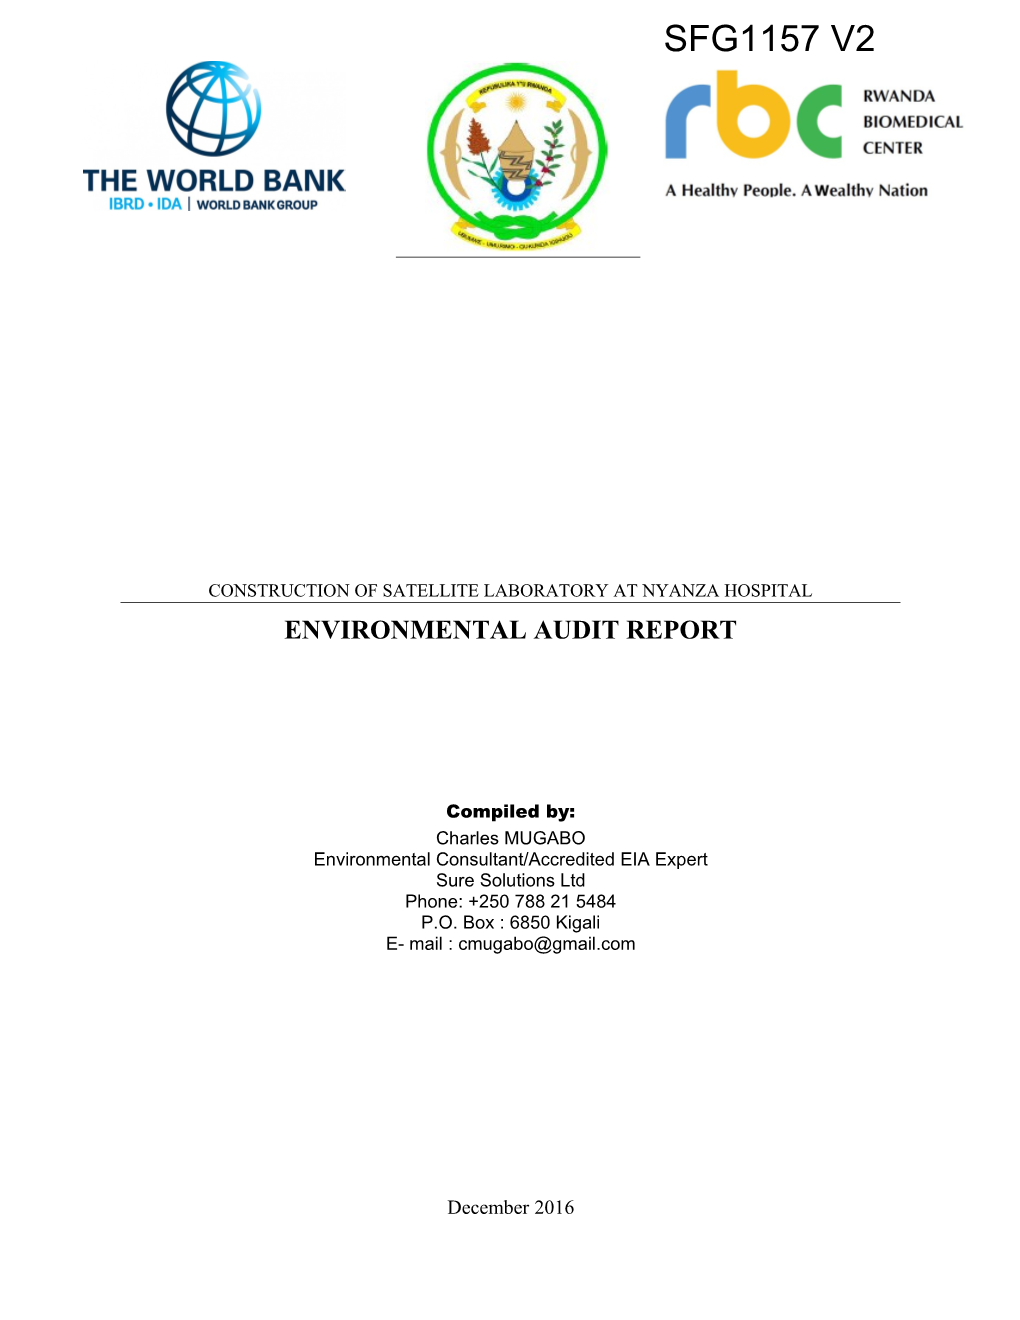 Environmental Management Framework (EMF)